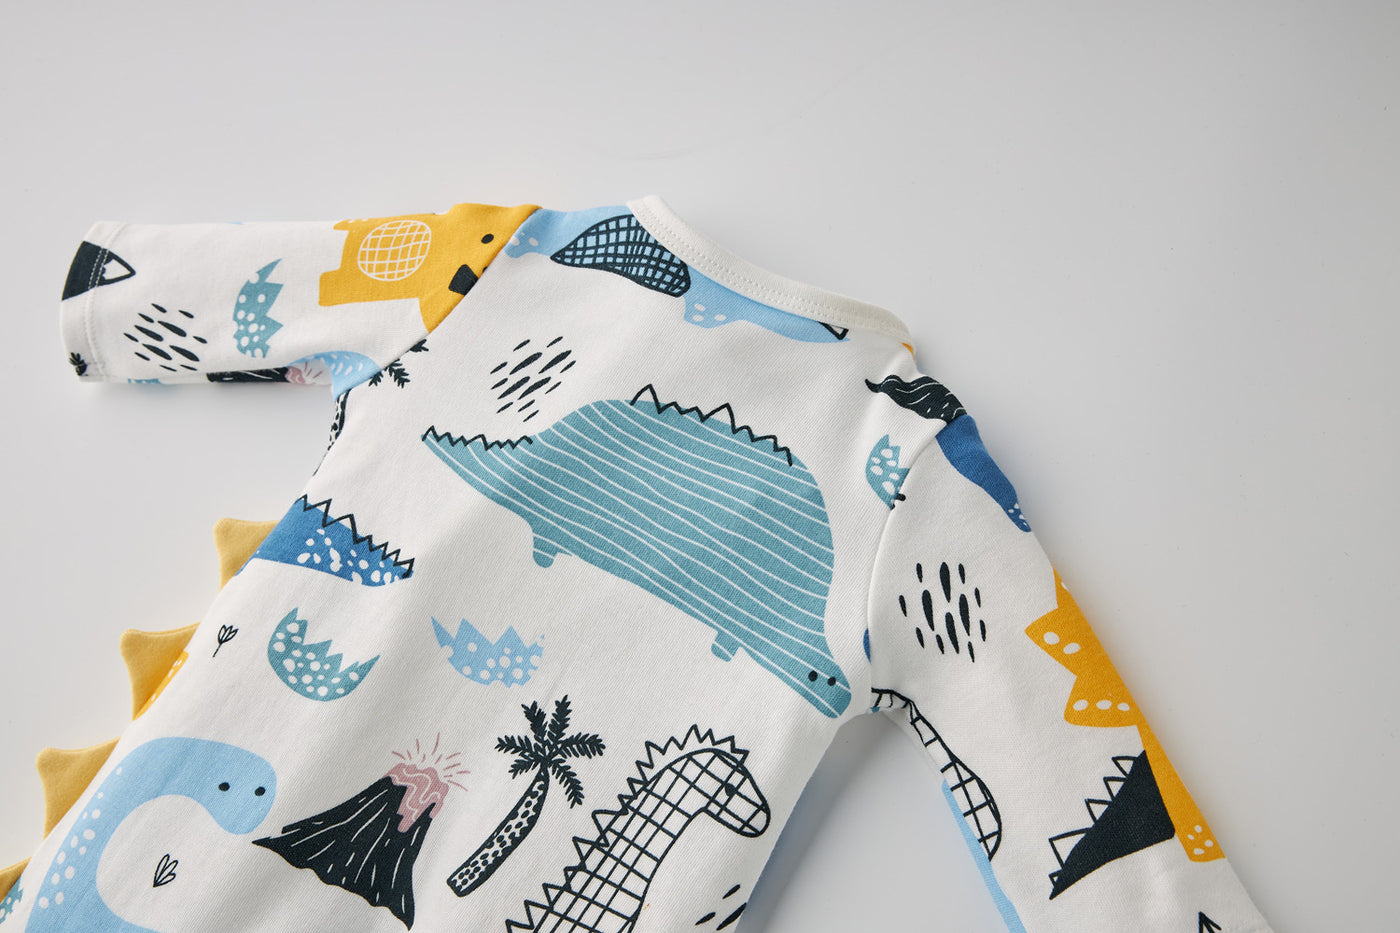 Baby Boy Dinosaur Prints Spikes Two Way Zip Sleepsuit All In One Jumpsuit - Little Kooma